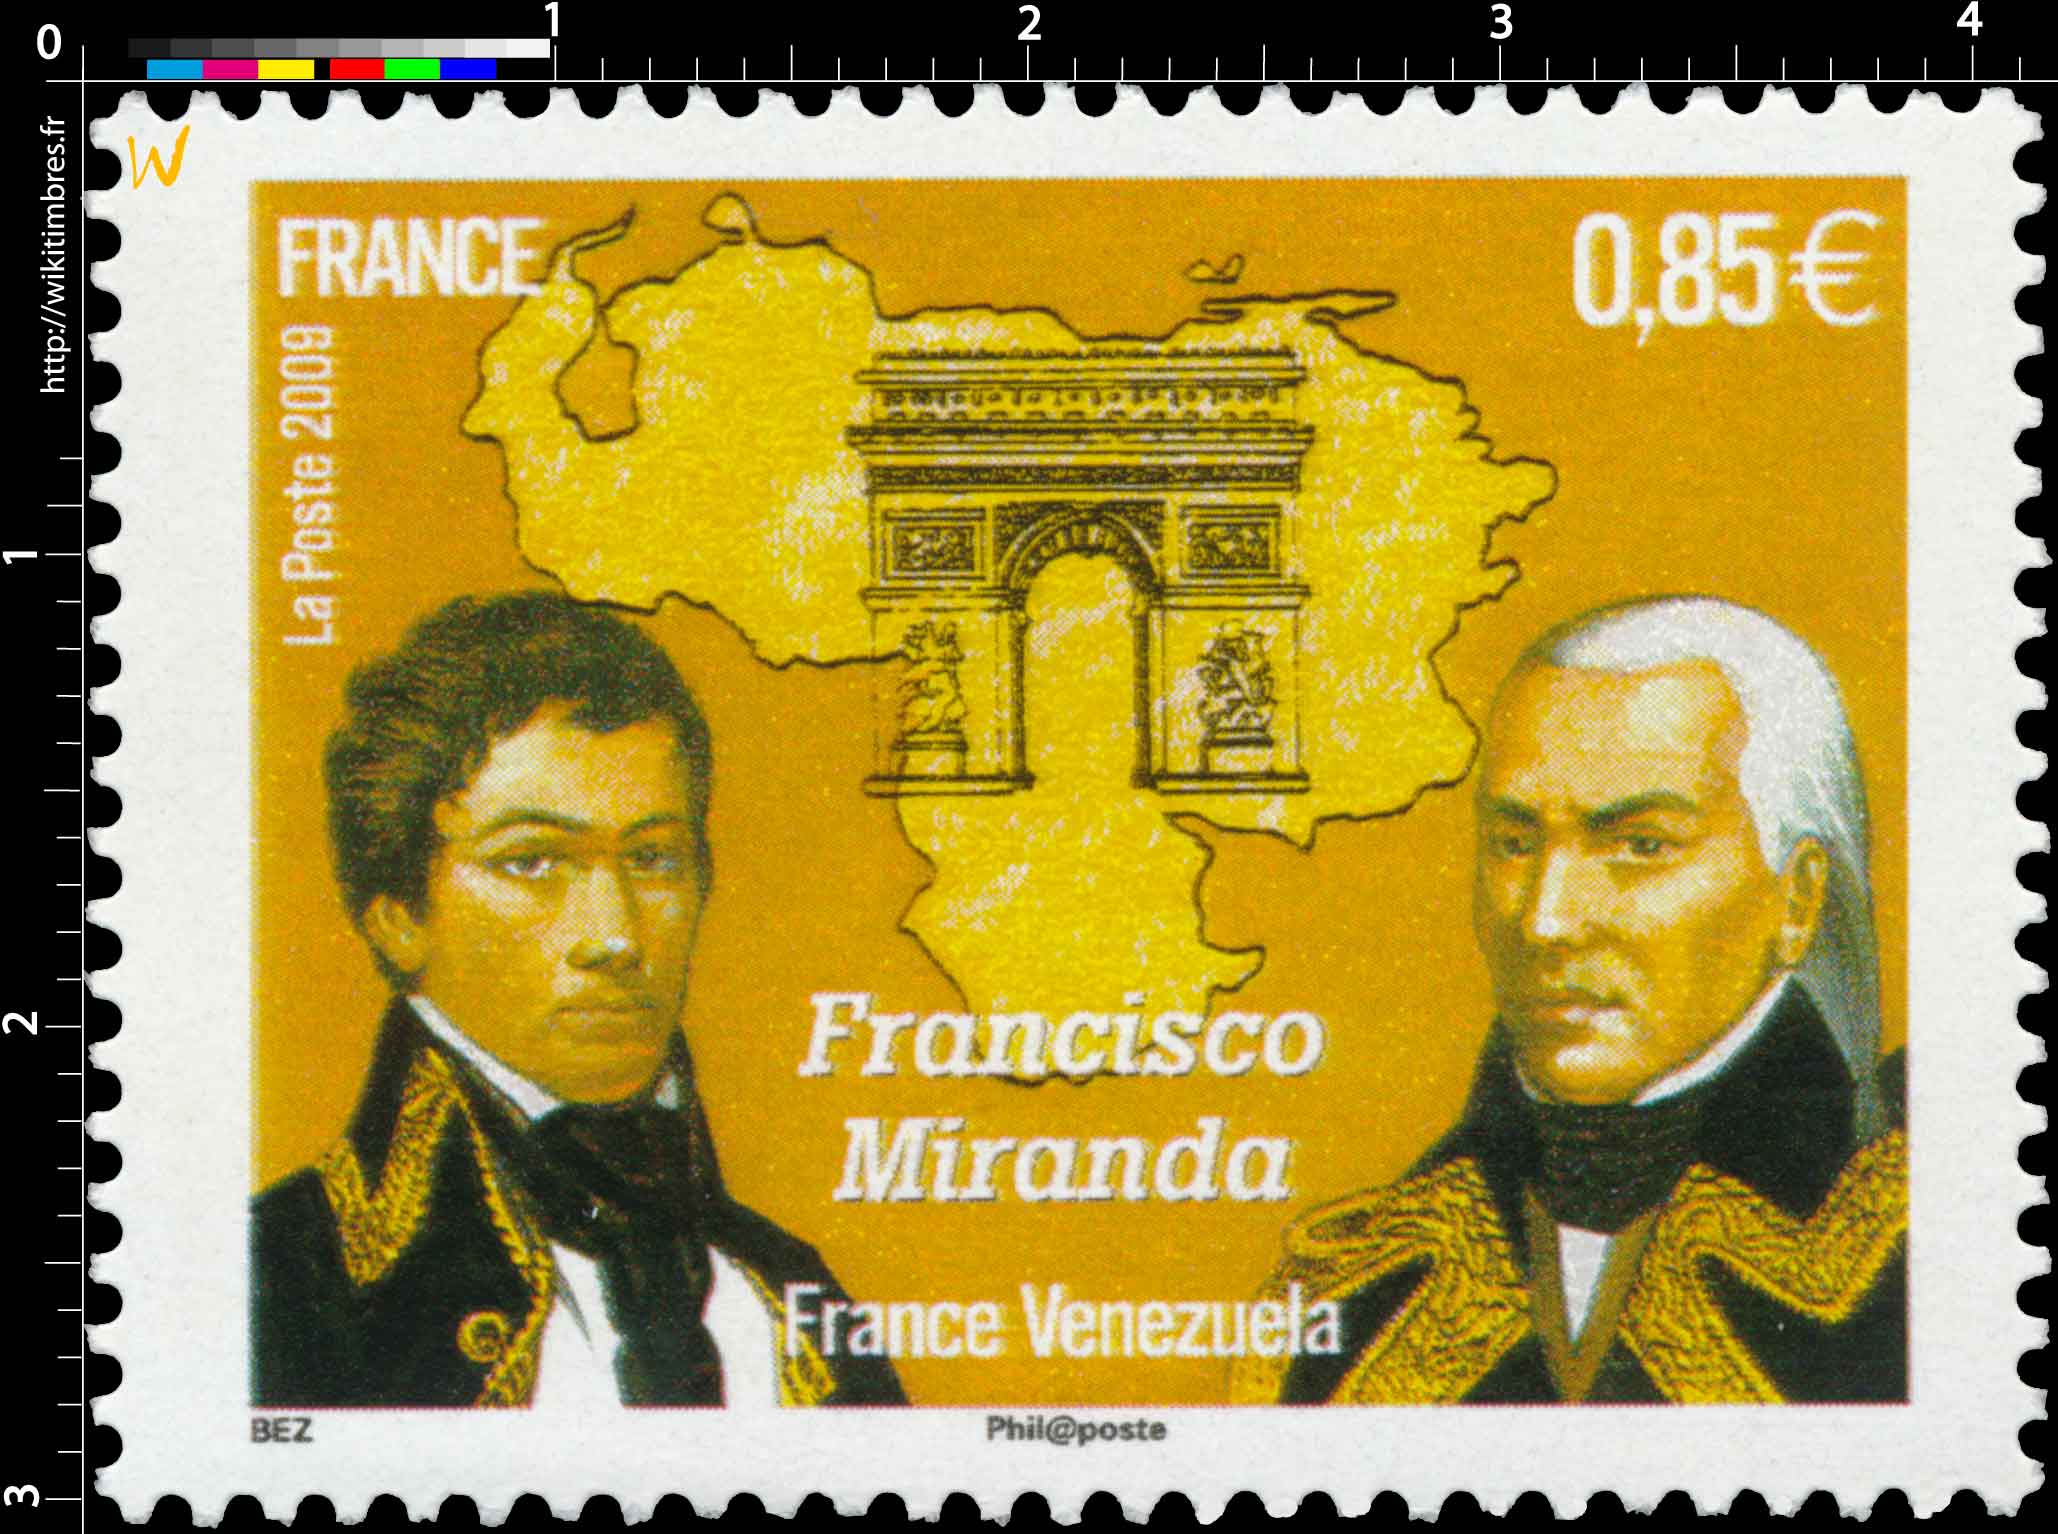 2009 Francisco Miranda France Venezuela